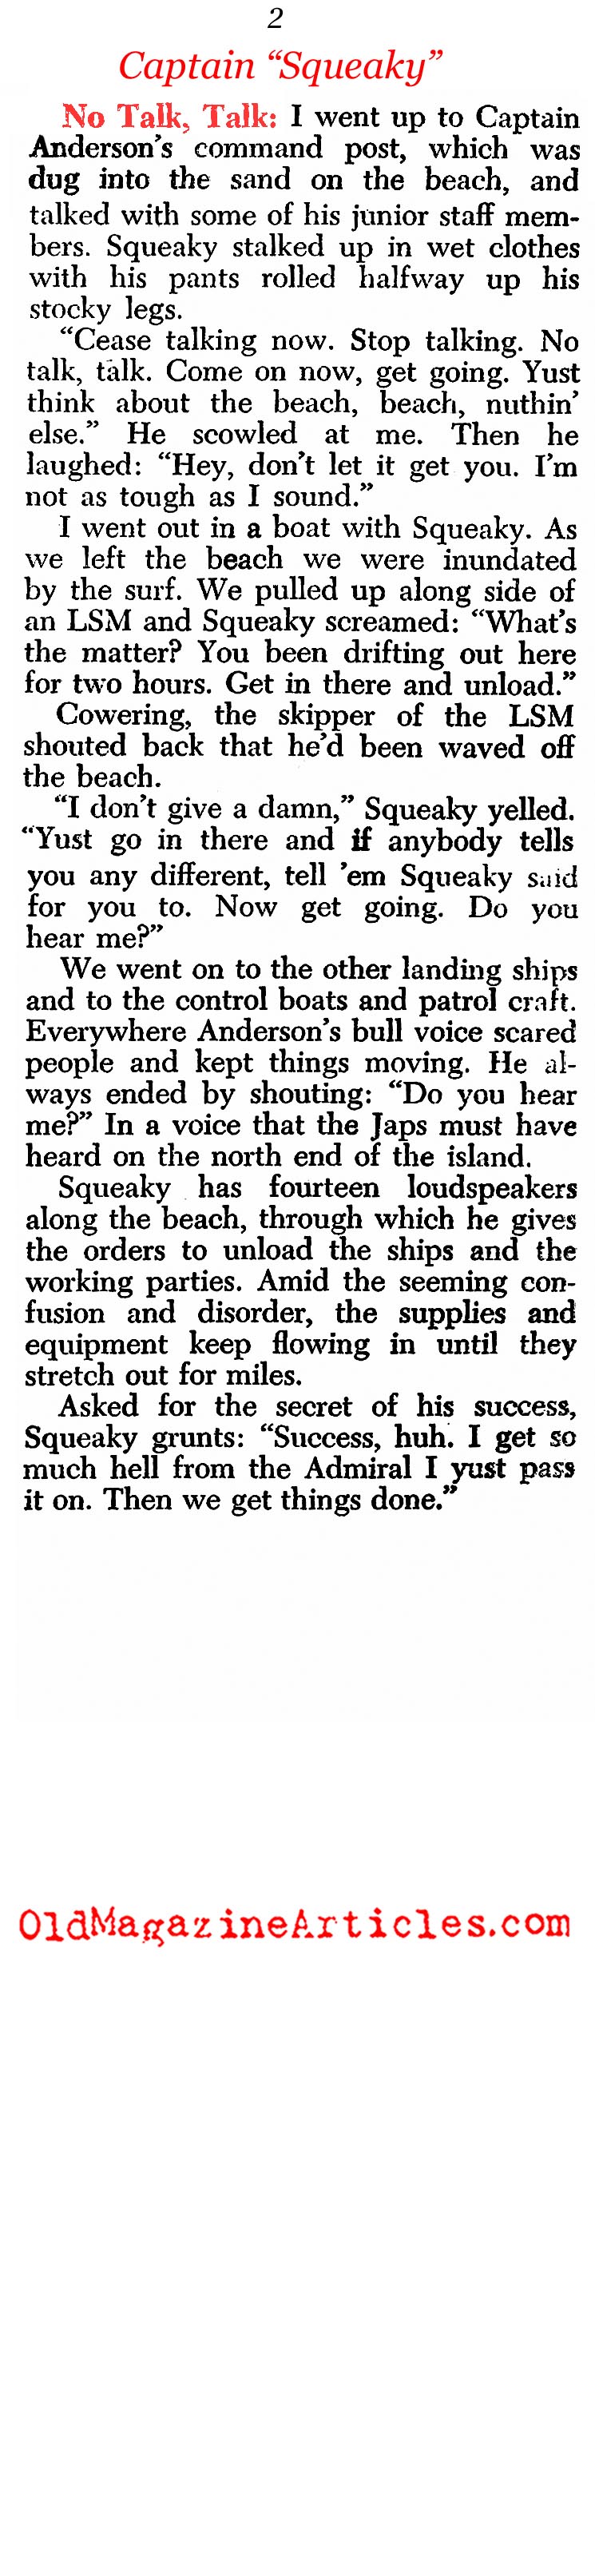 The Beachmaster (Newsweek Magazine, 1945)